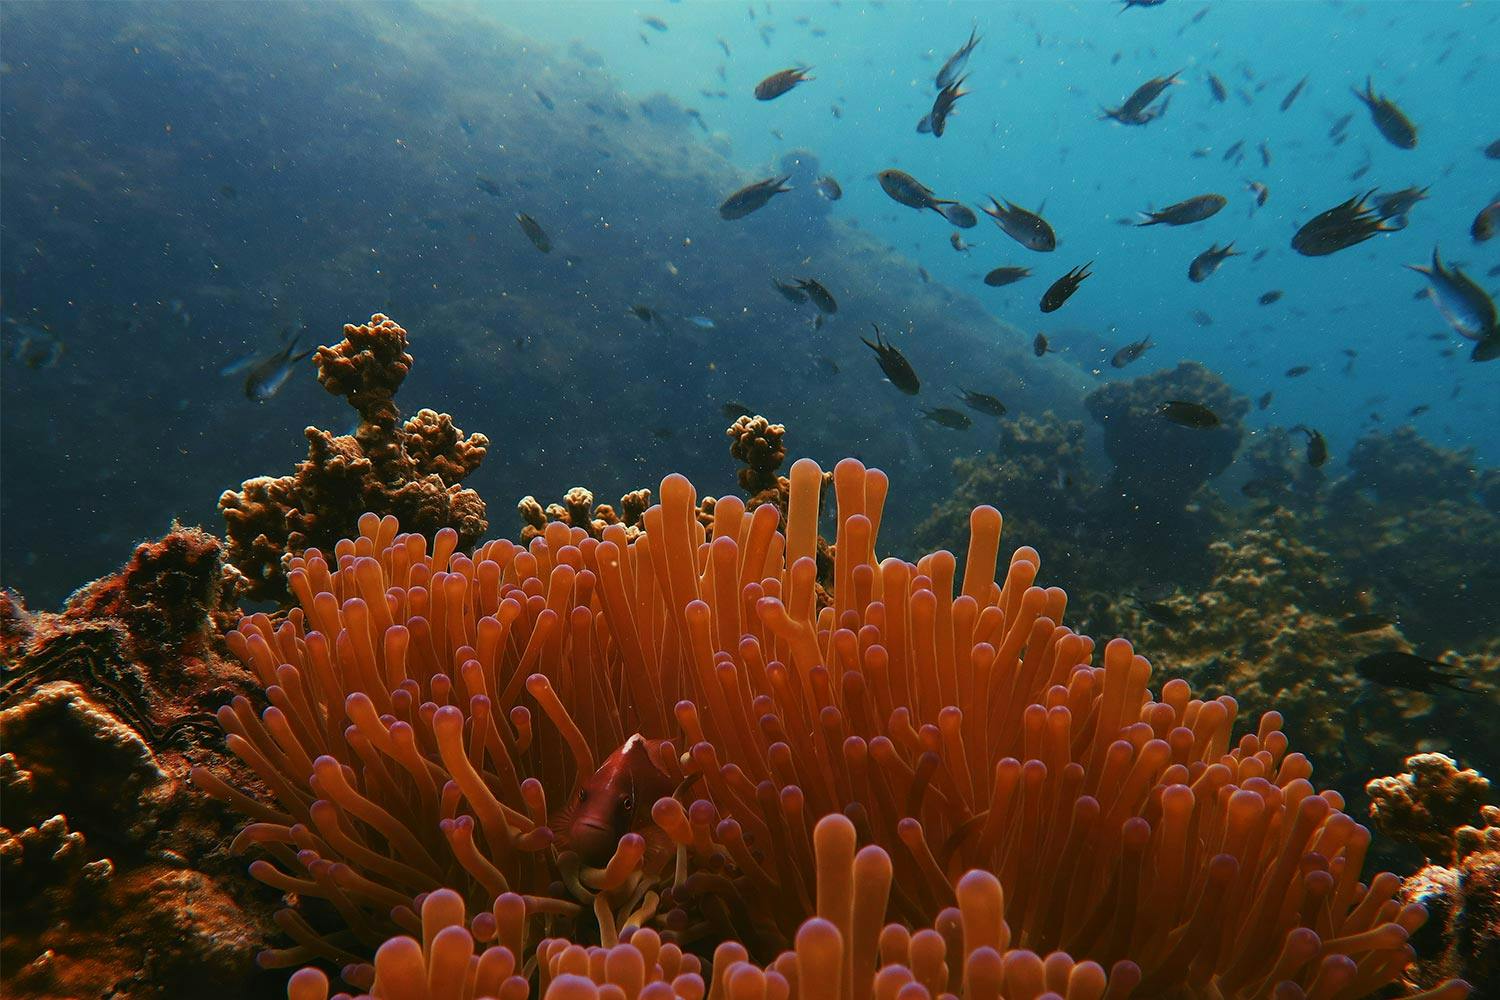 A small school of fish swim above a red sea anemone near Koh Tao, Thailand.